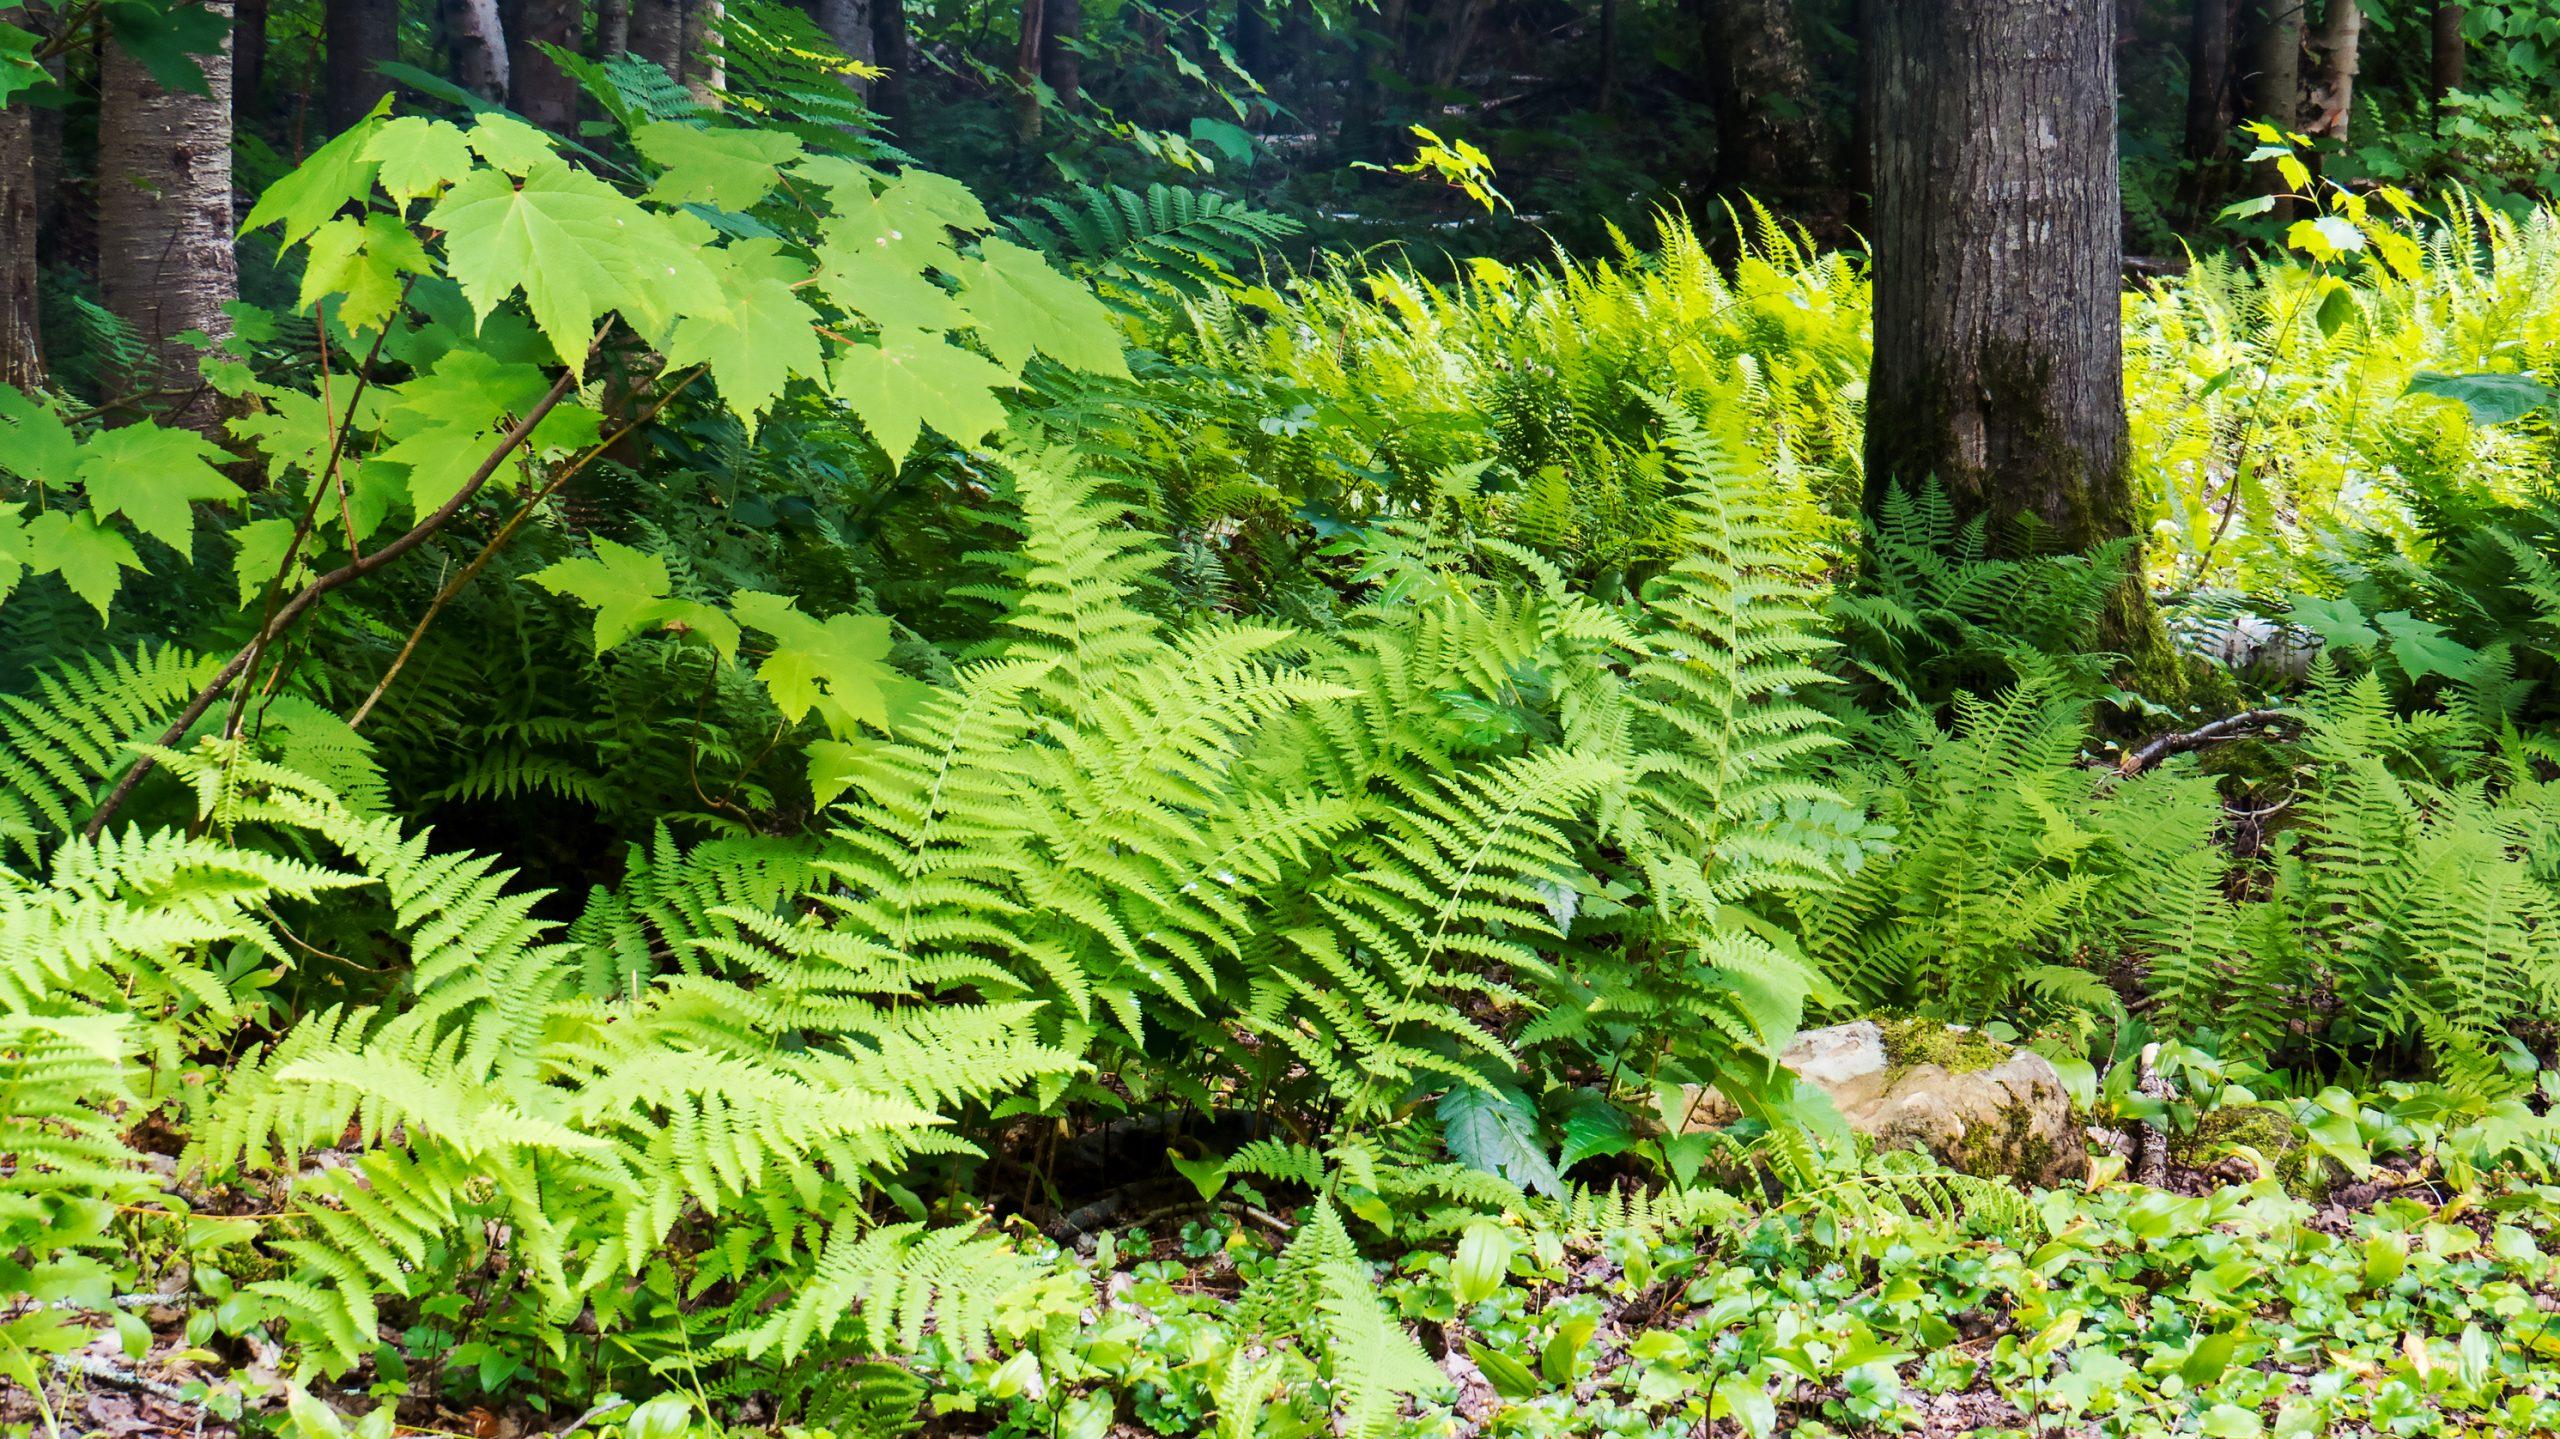 Vibrant green ferns and other vegetation